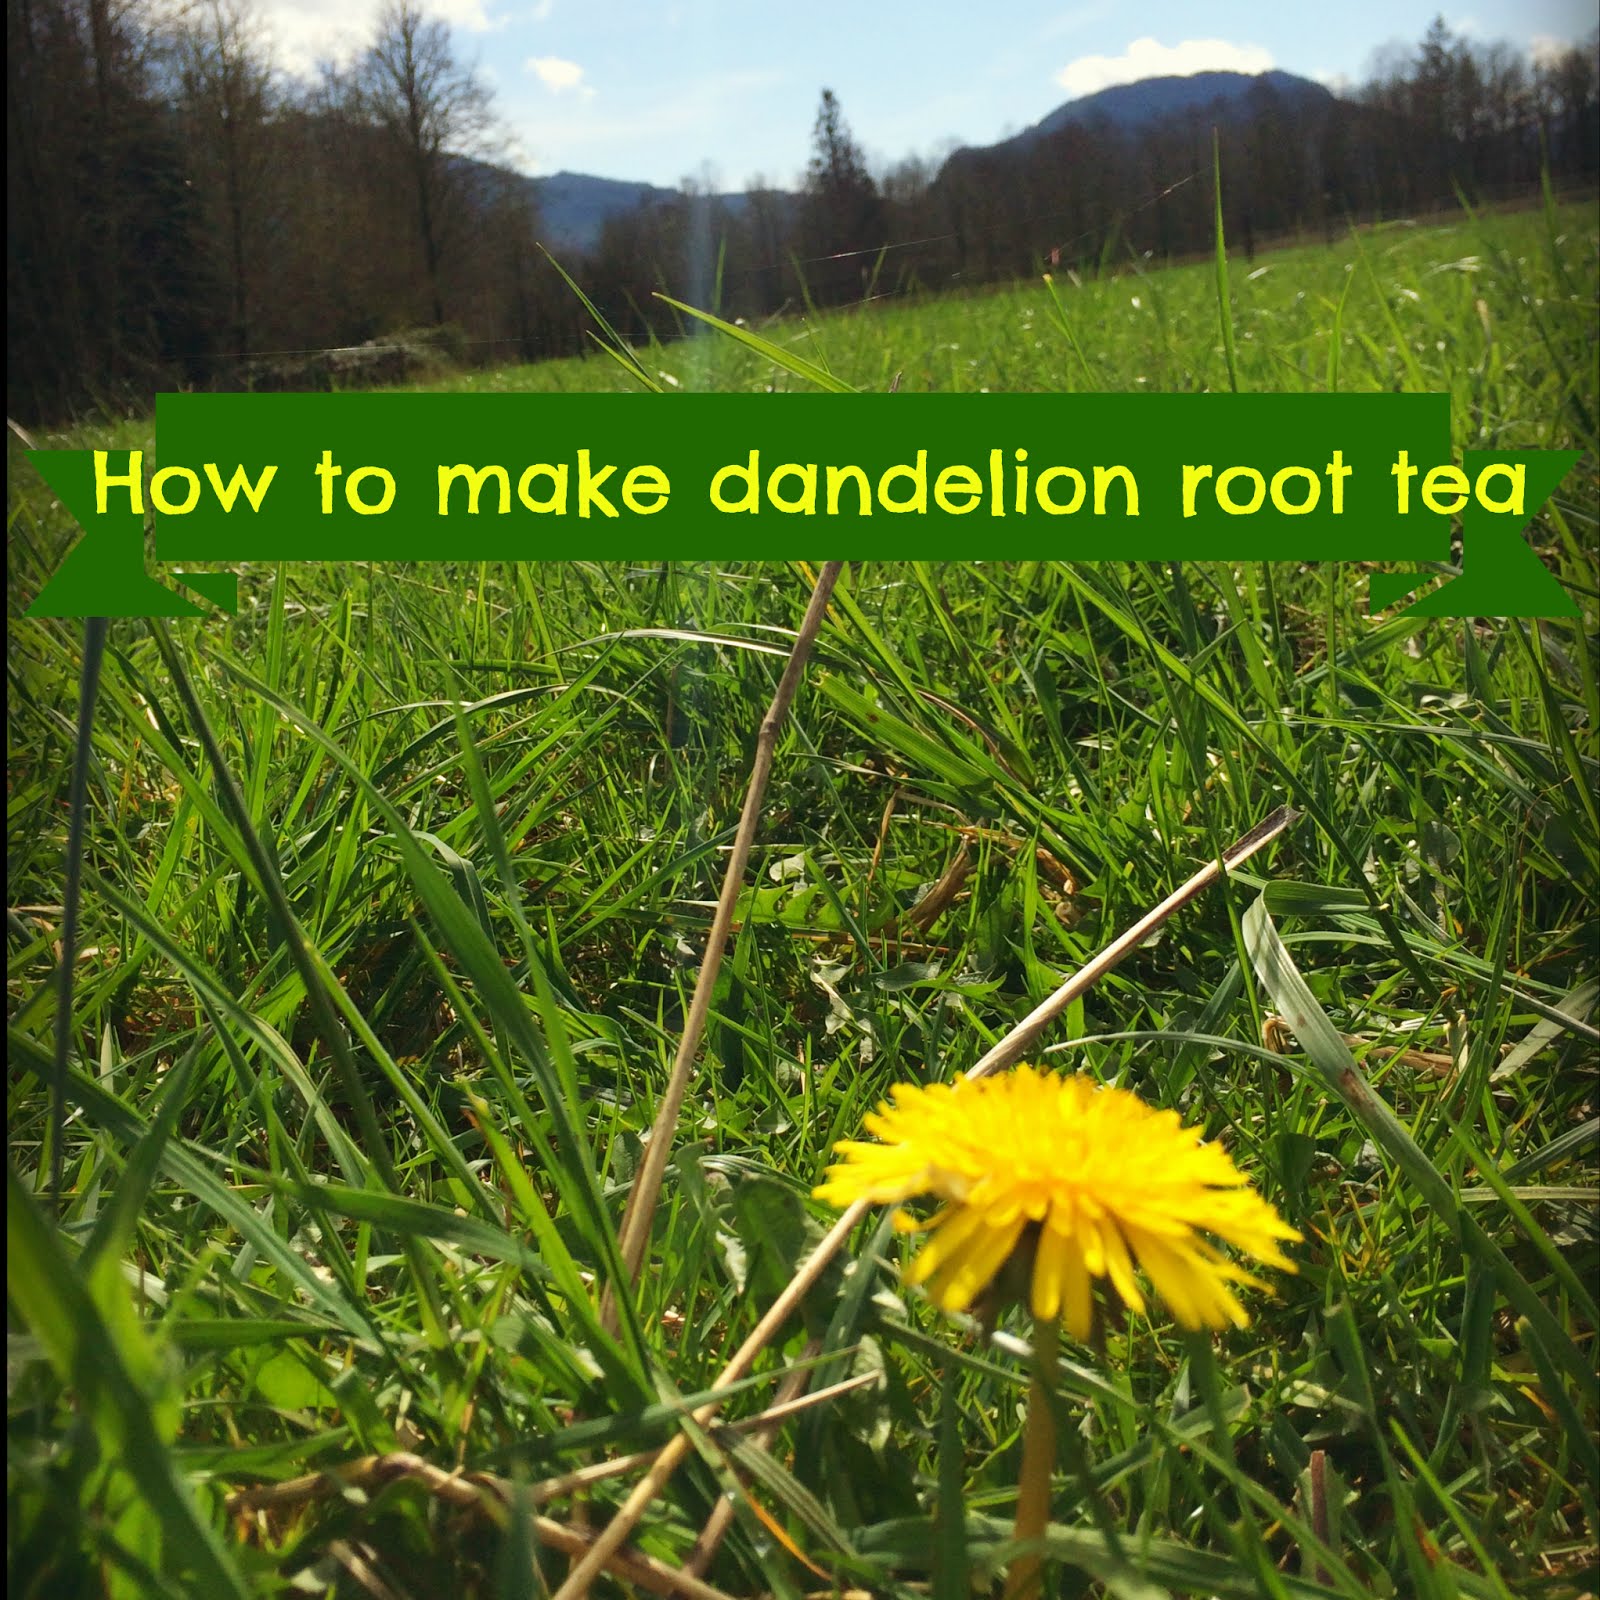 How to make dandelion root tea